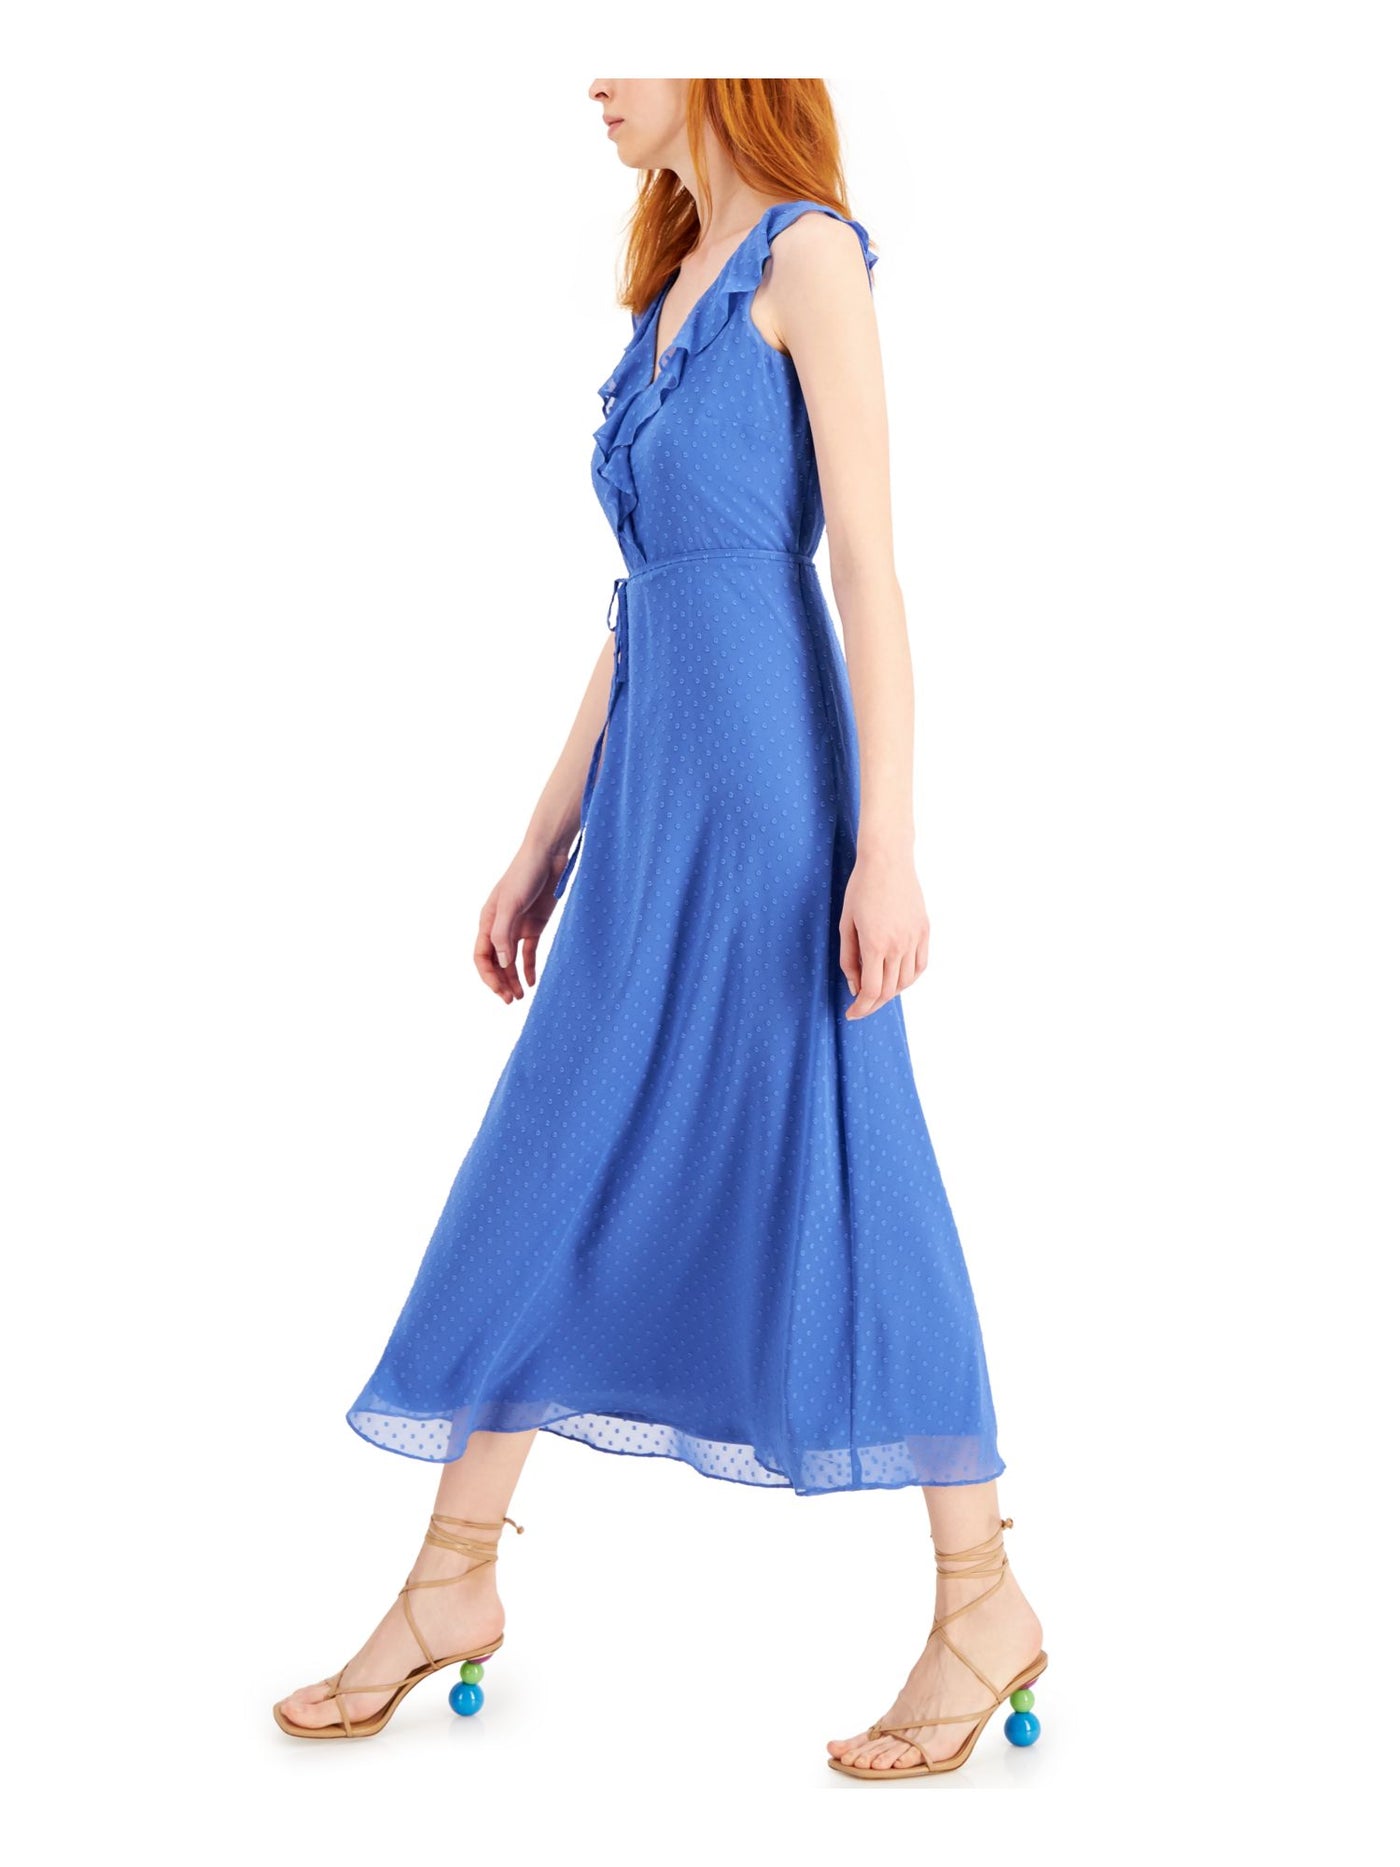 INC DRESS Womens Blue Zippered Belted Ruffled Neckline Sleeveless V Neck Maxi Fit + Flare Dress 8